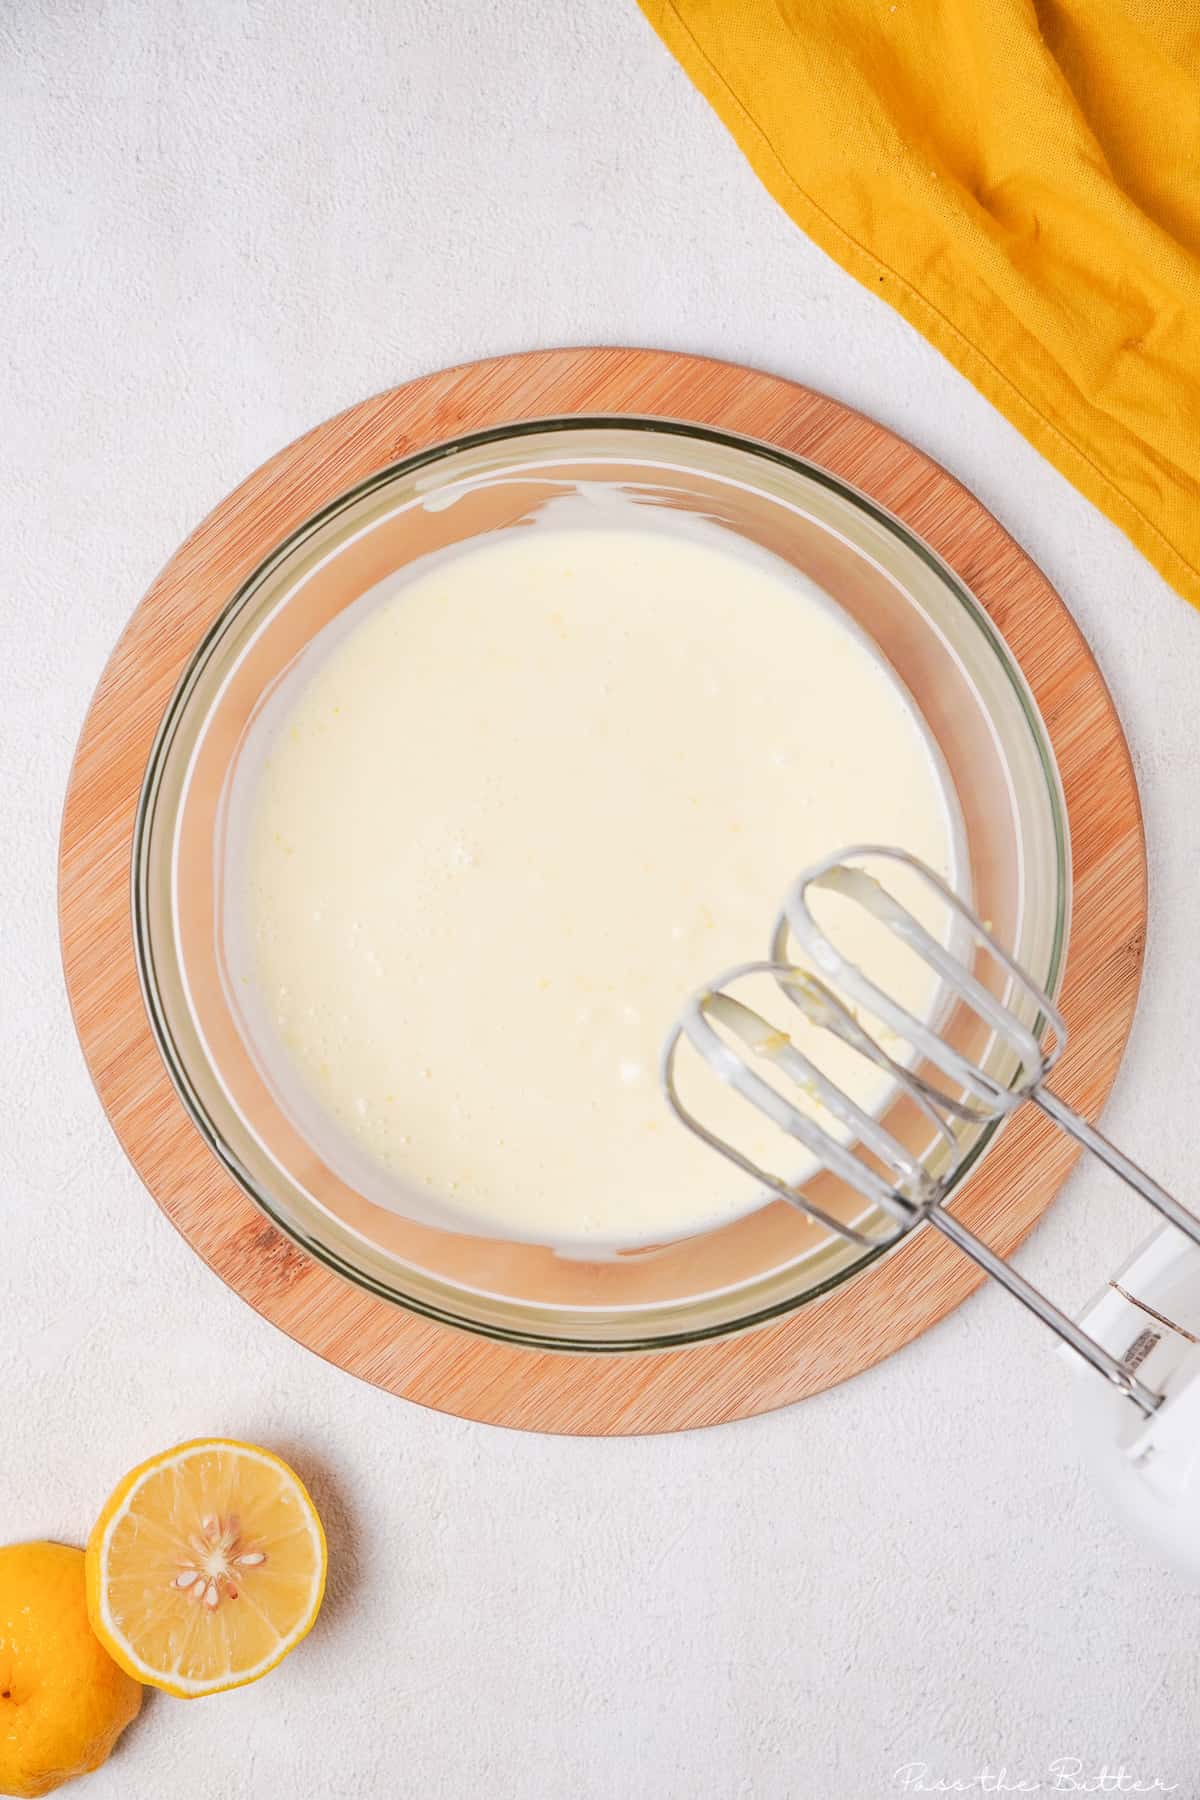 Ingredients for no bake lemon tart in bowl with hand mixer.